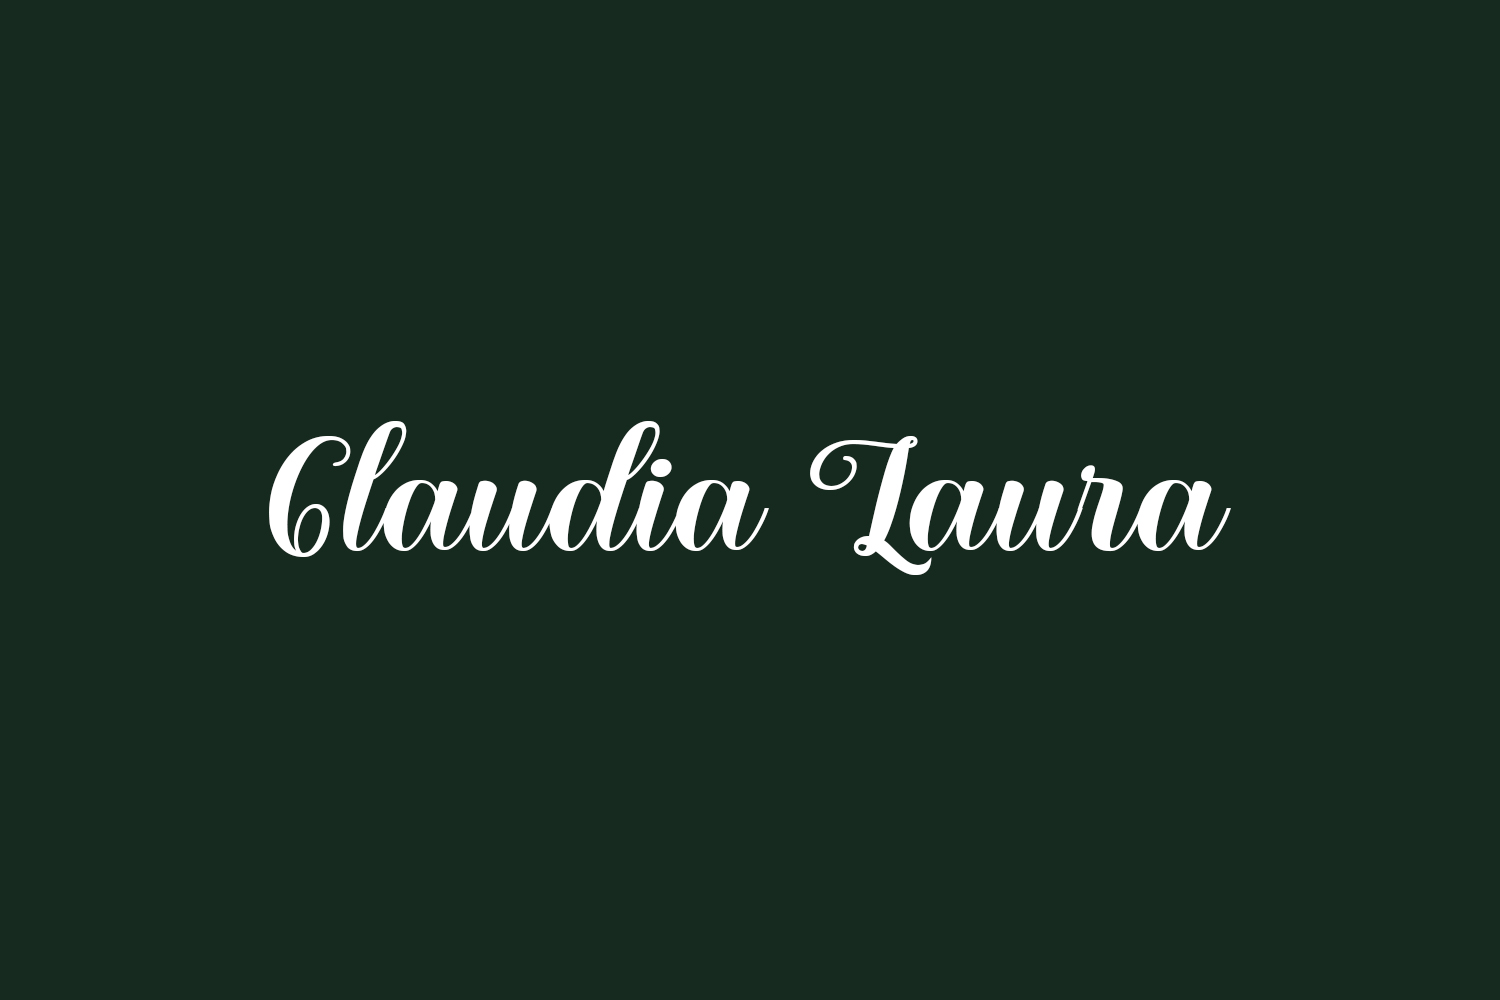 Claudia Laura Free Font